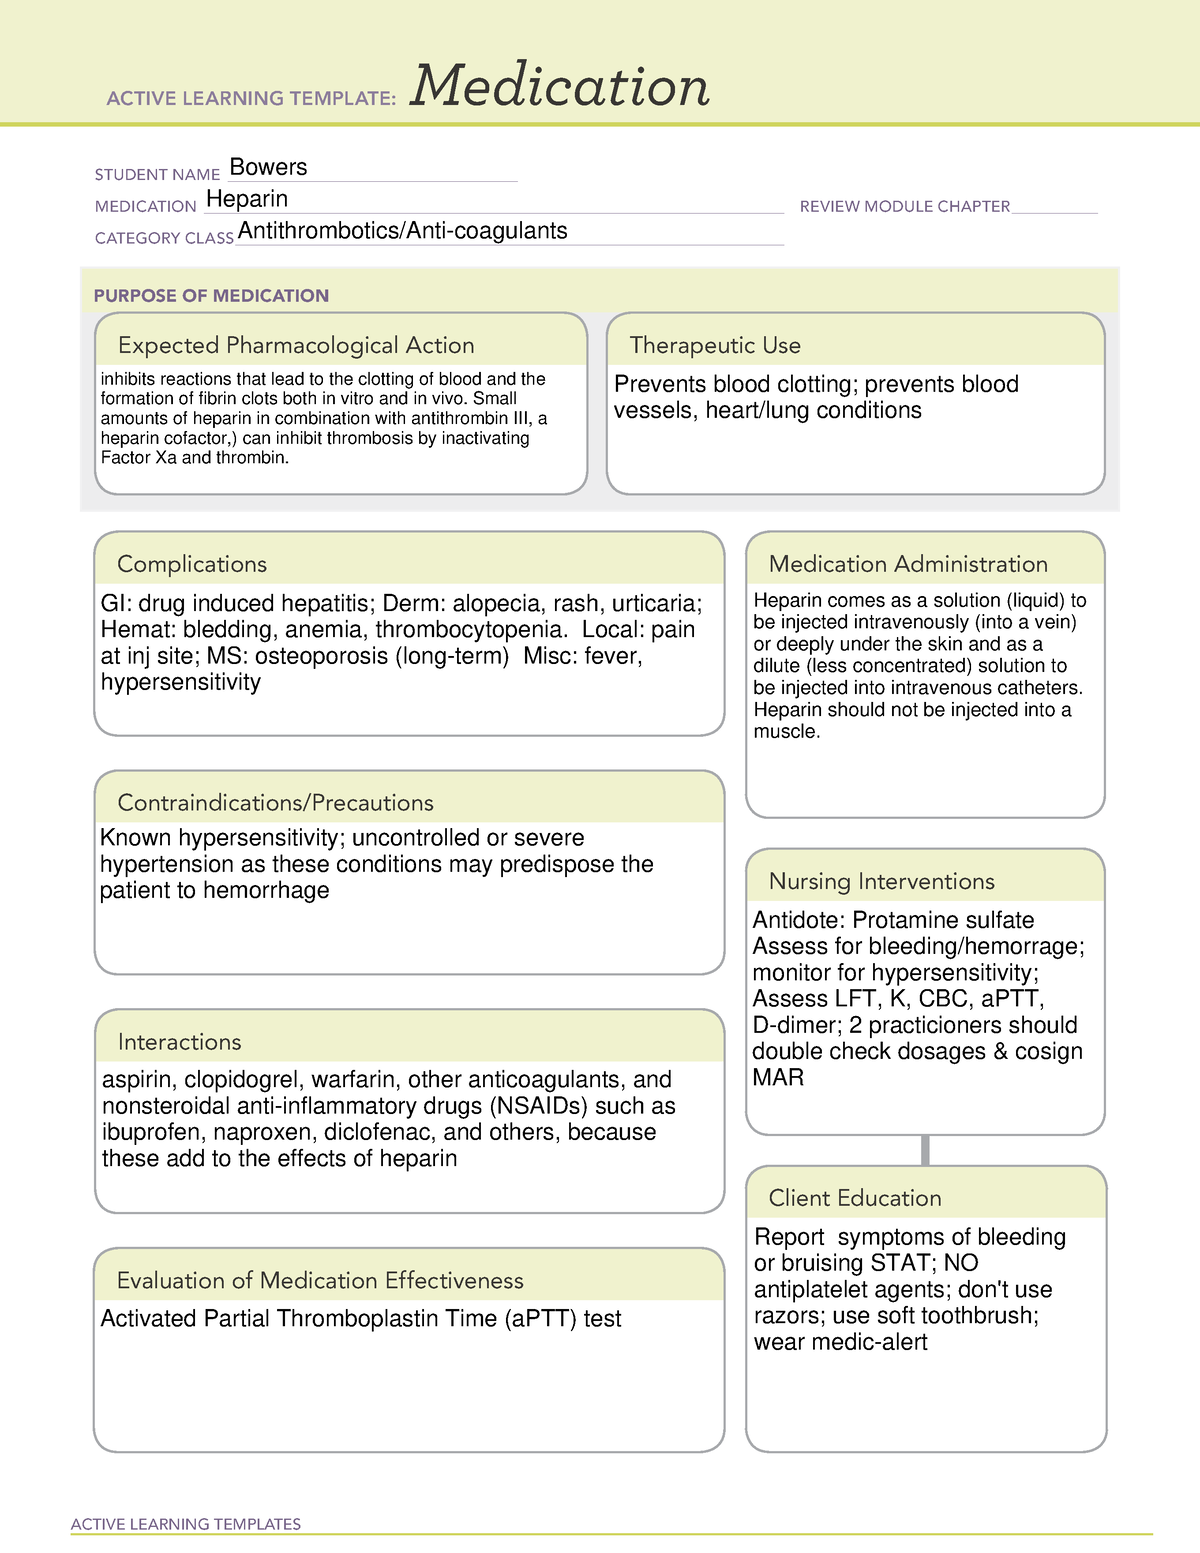 Heparin Drug information sheet ACTIVE LEARNING TEMPLATES Medication